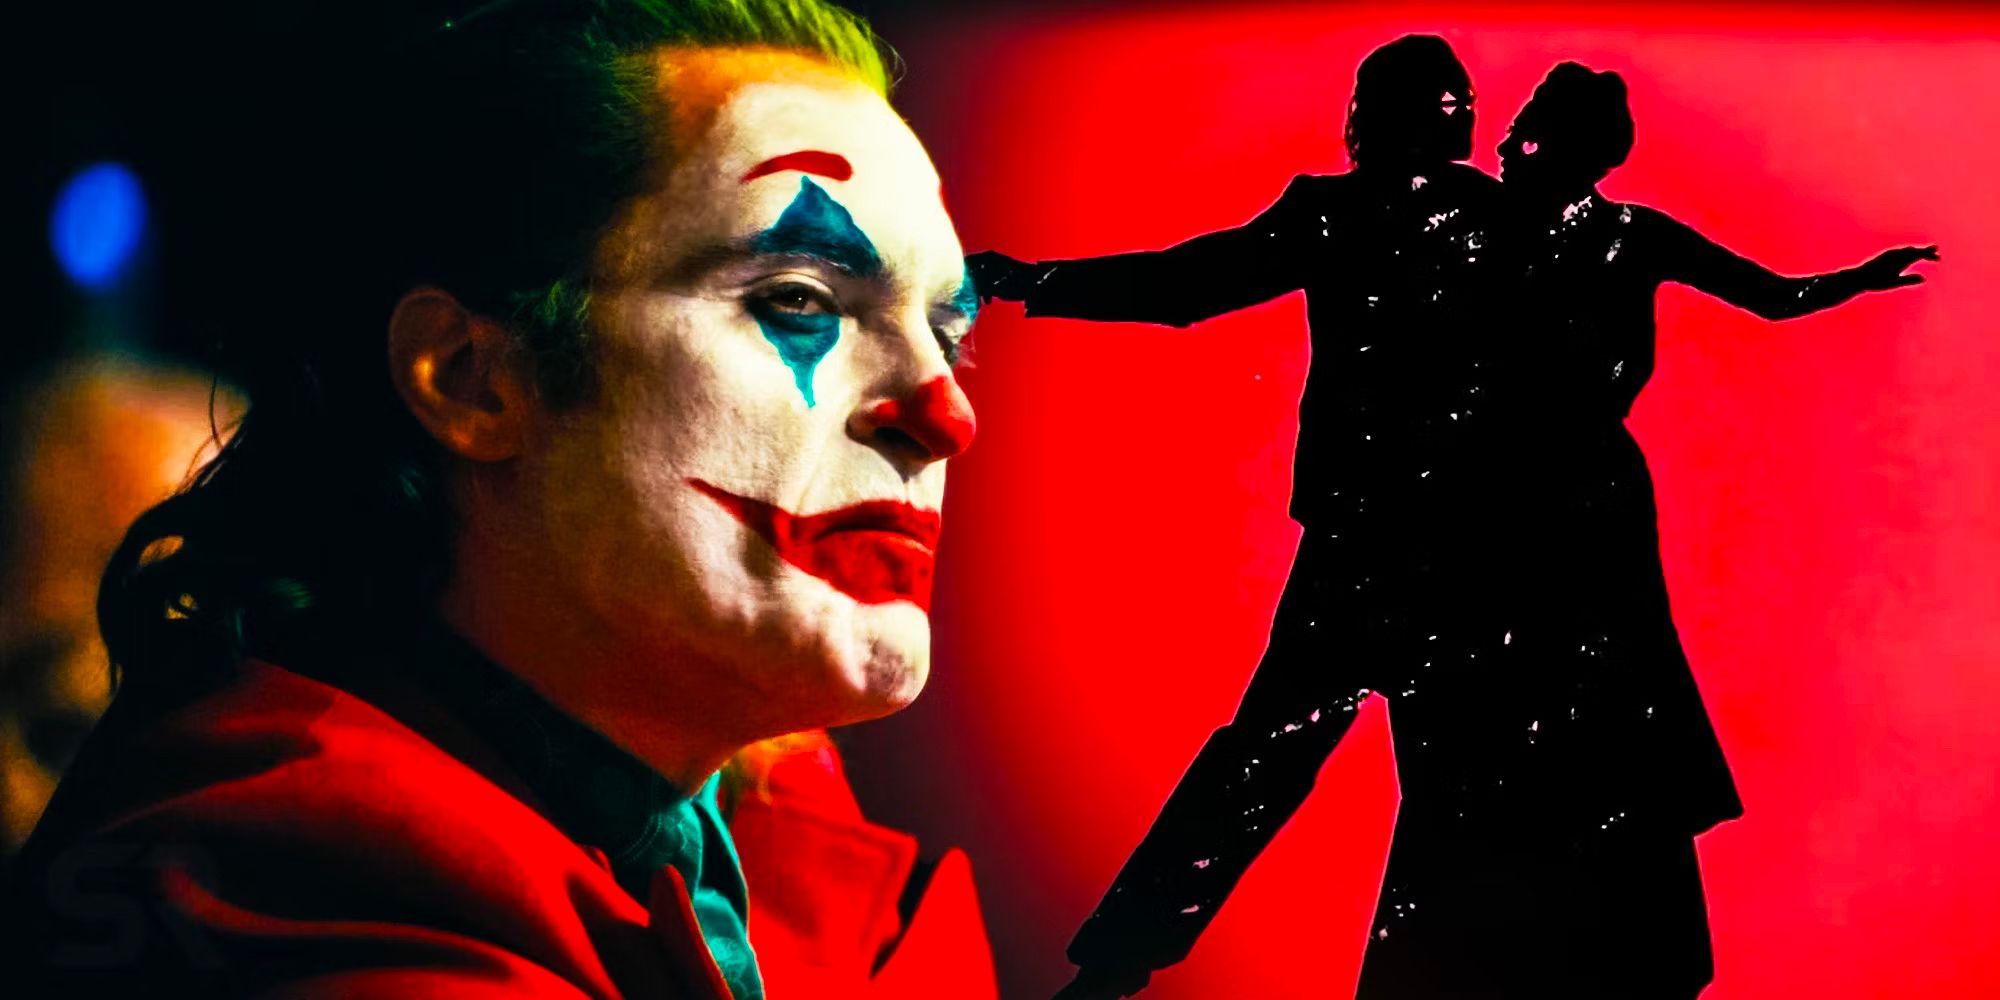 Joaquin Phoenix in Joker and Lady Gaga silhouette for Joker 2